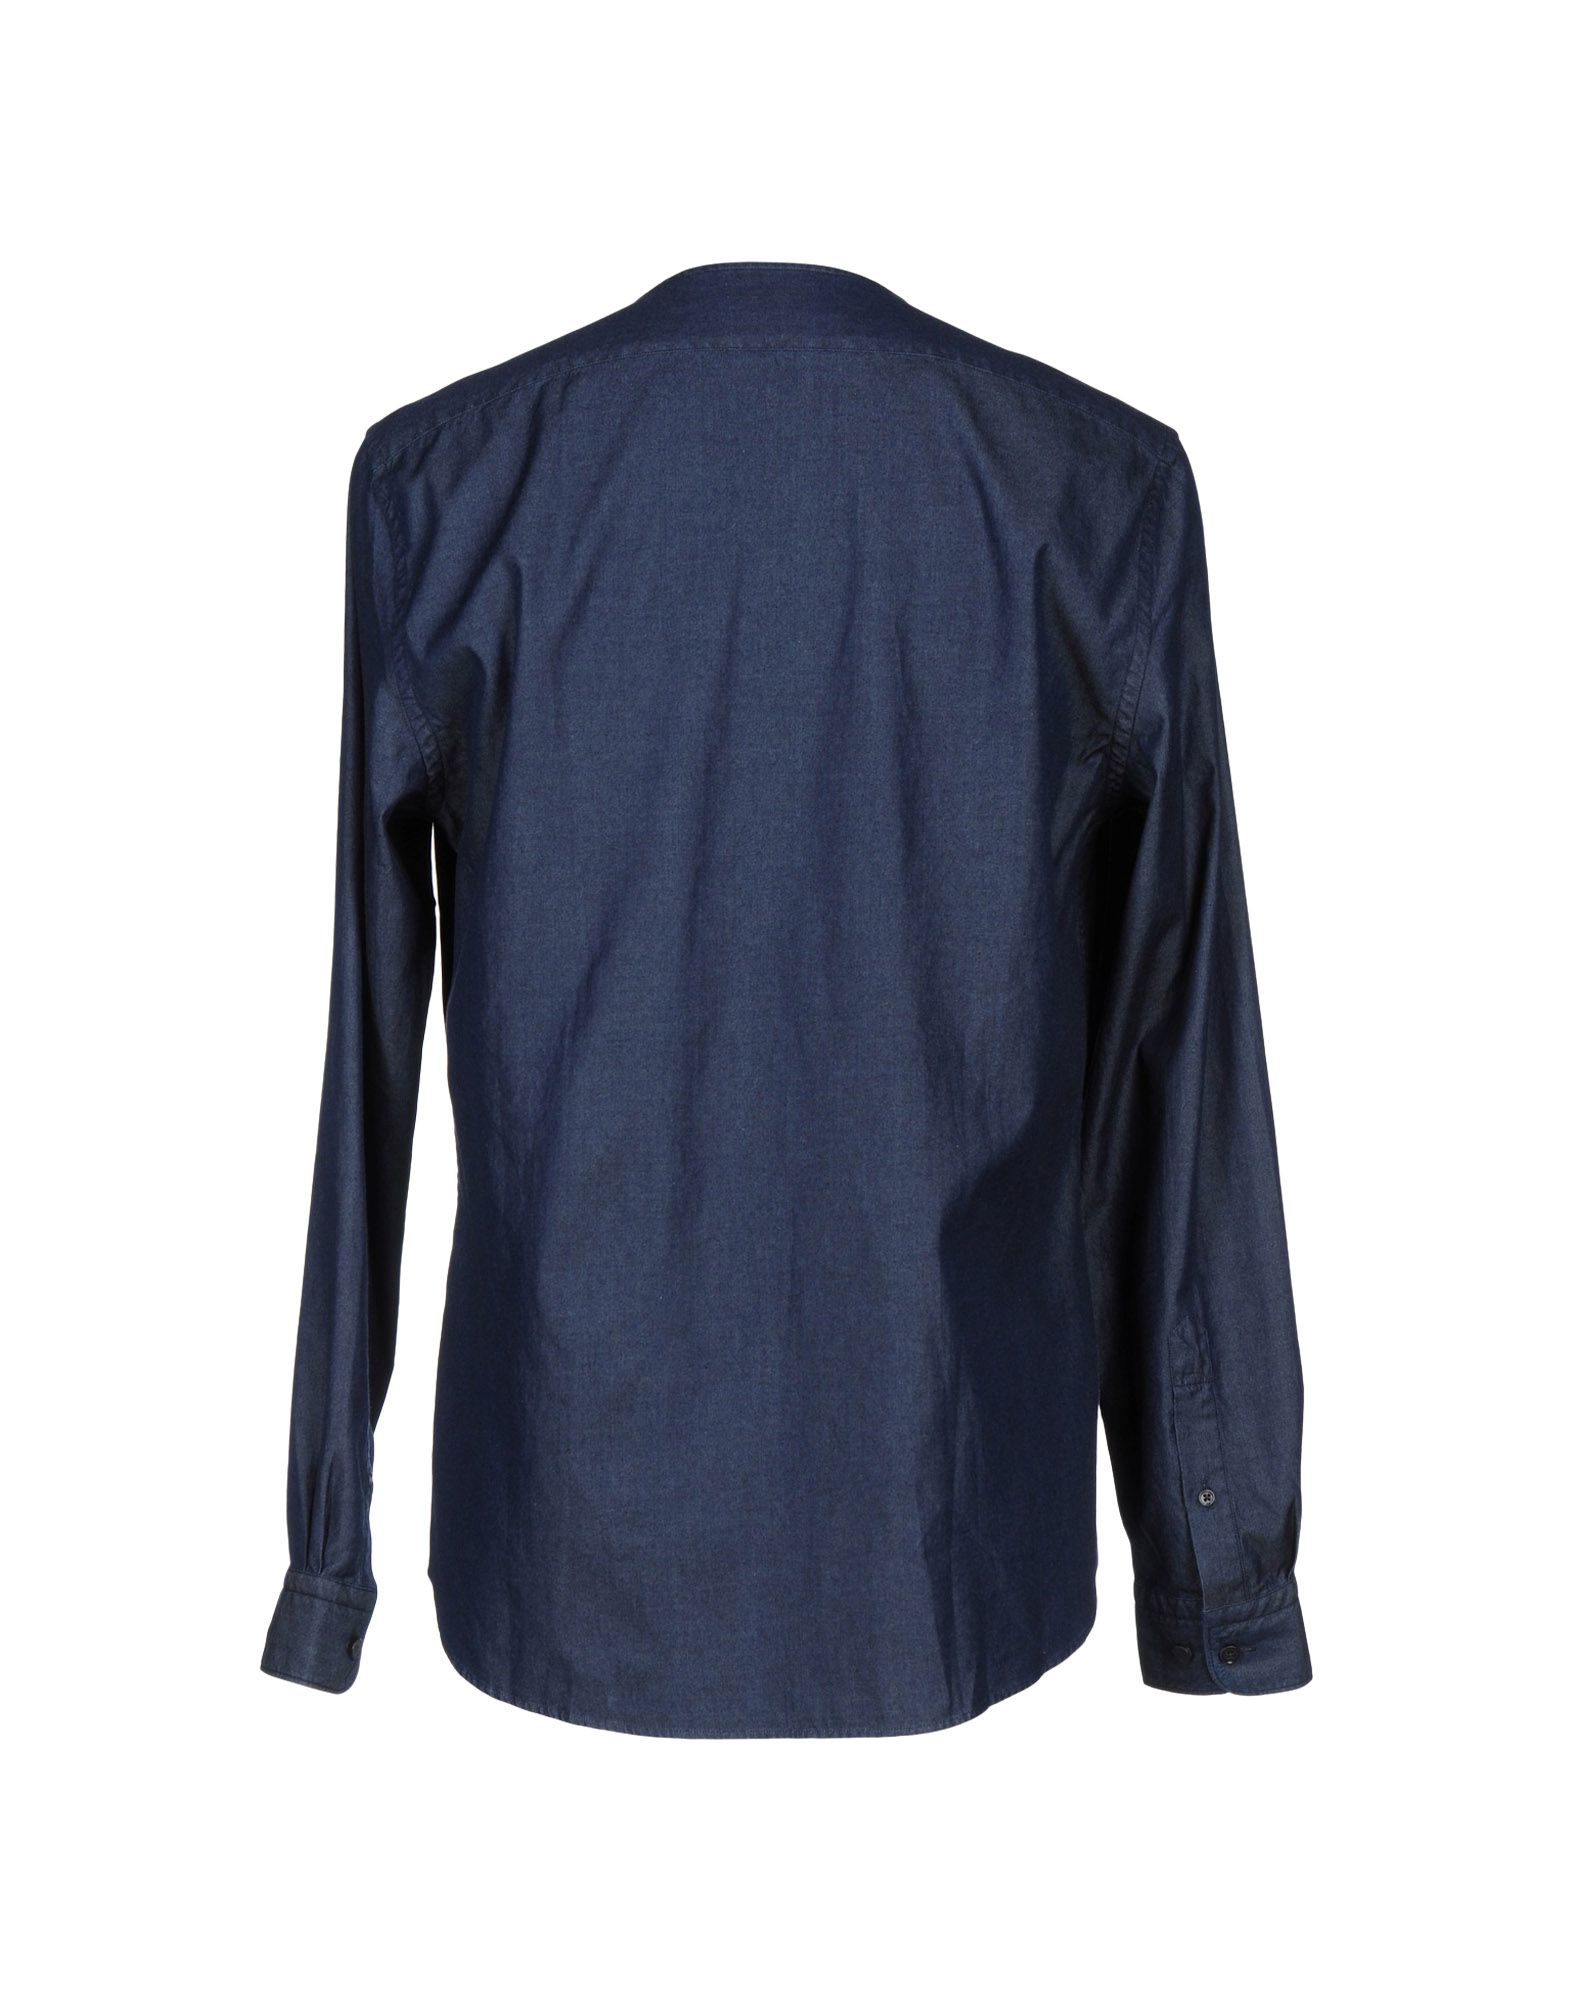 Lyst - Façonnable Denim Shirt in Blue for Men